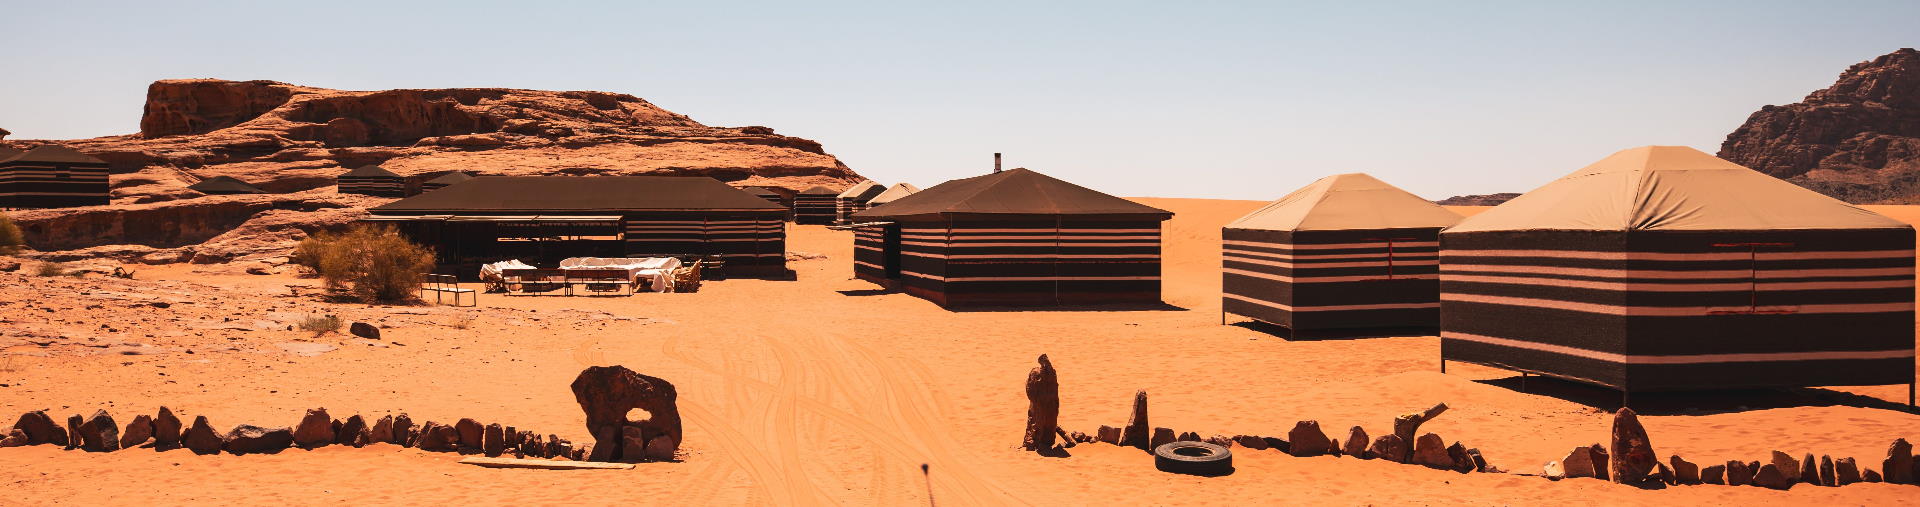 Traditional Bedouin campsite petra